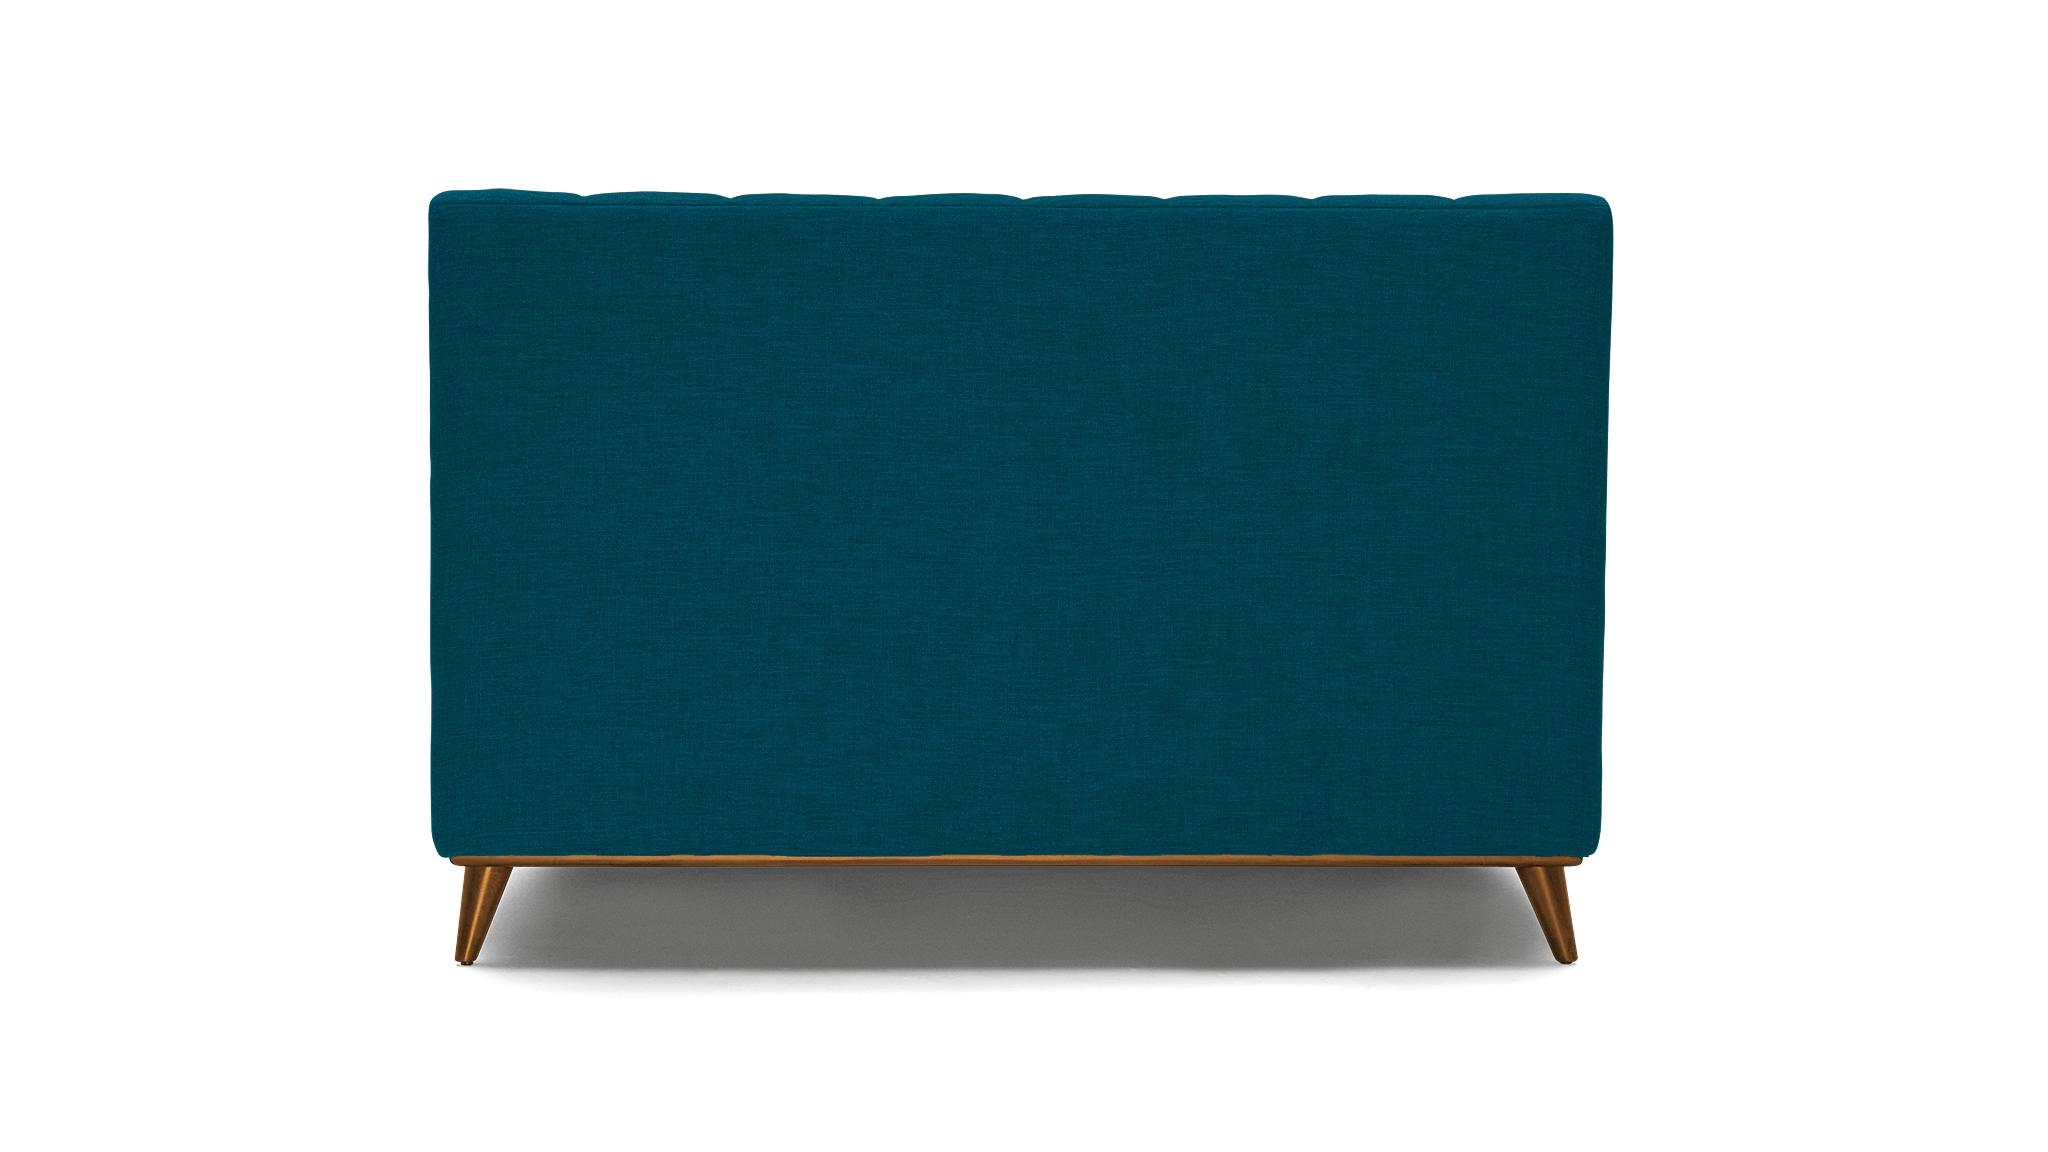 Blue Hughes Mid Century Modern Bed - Key Largo Zenith Teal - Mocha - Full - Image 4